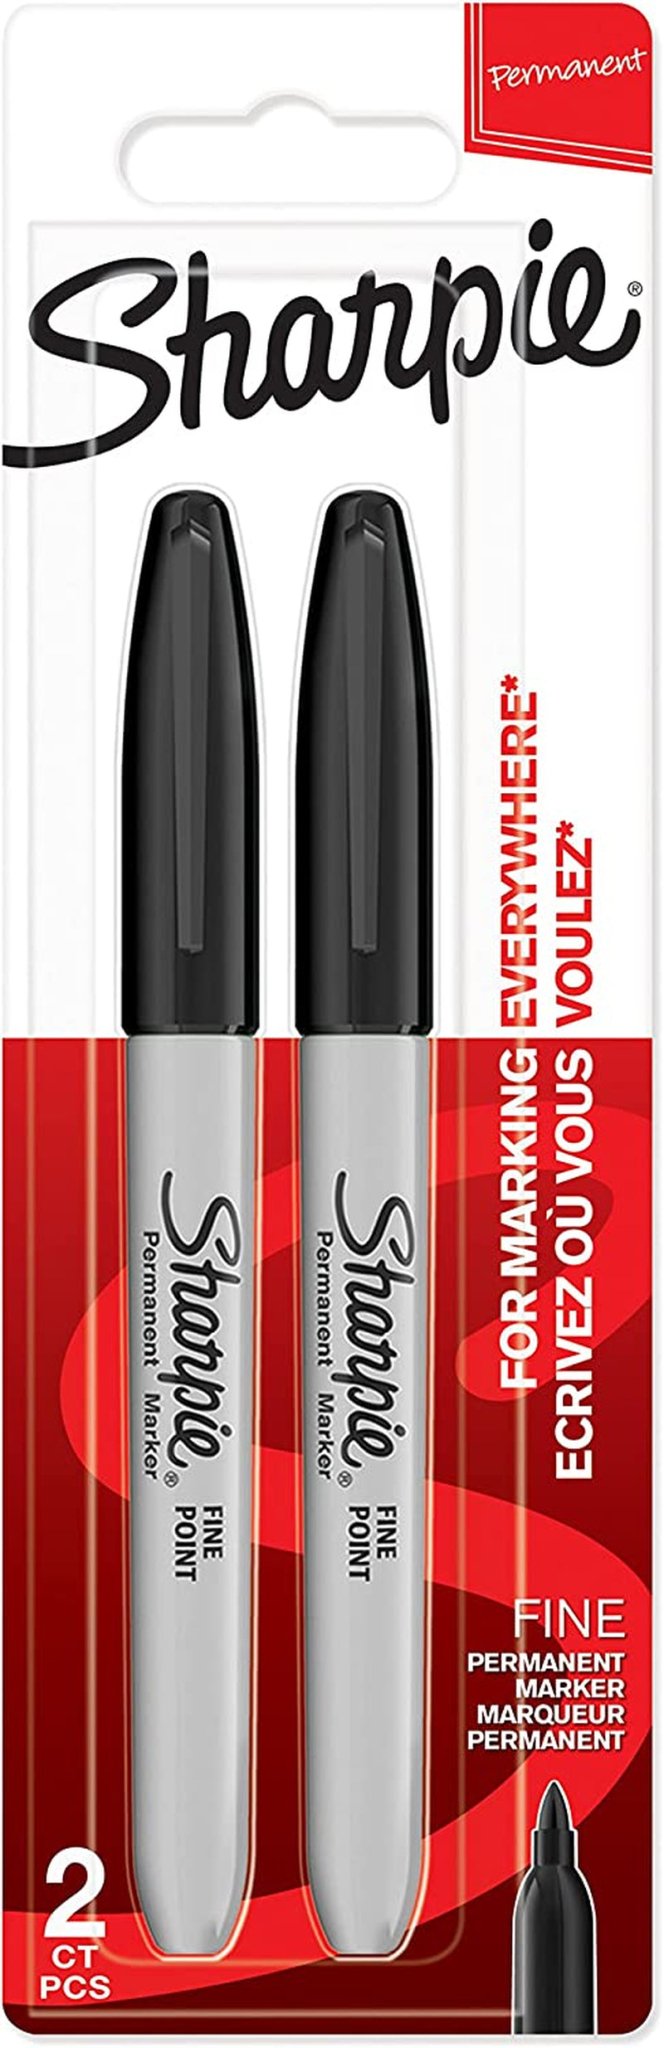 Sharpie Permanent Markers | Fine Point | Black | 2 Count - FoxMart™️ - FoxMart™️